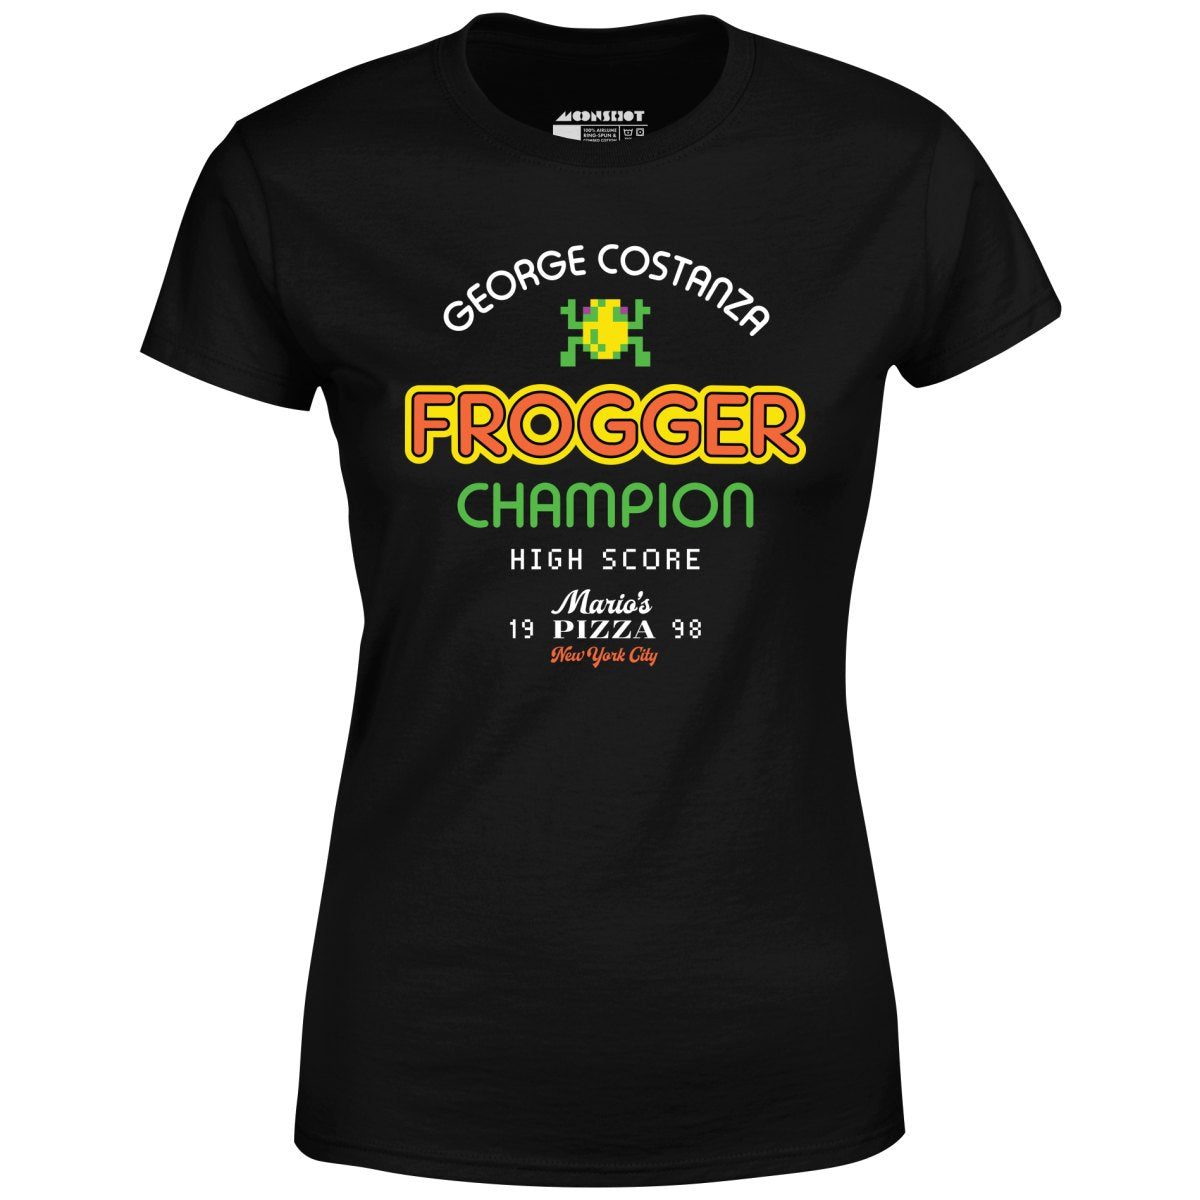 George Costanza Frogger Champion - Mario's Pizza - Women's T-Shirt